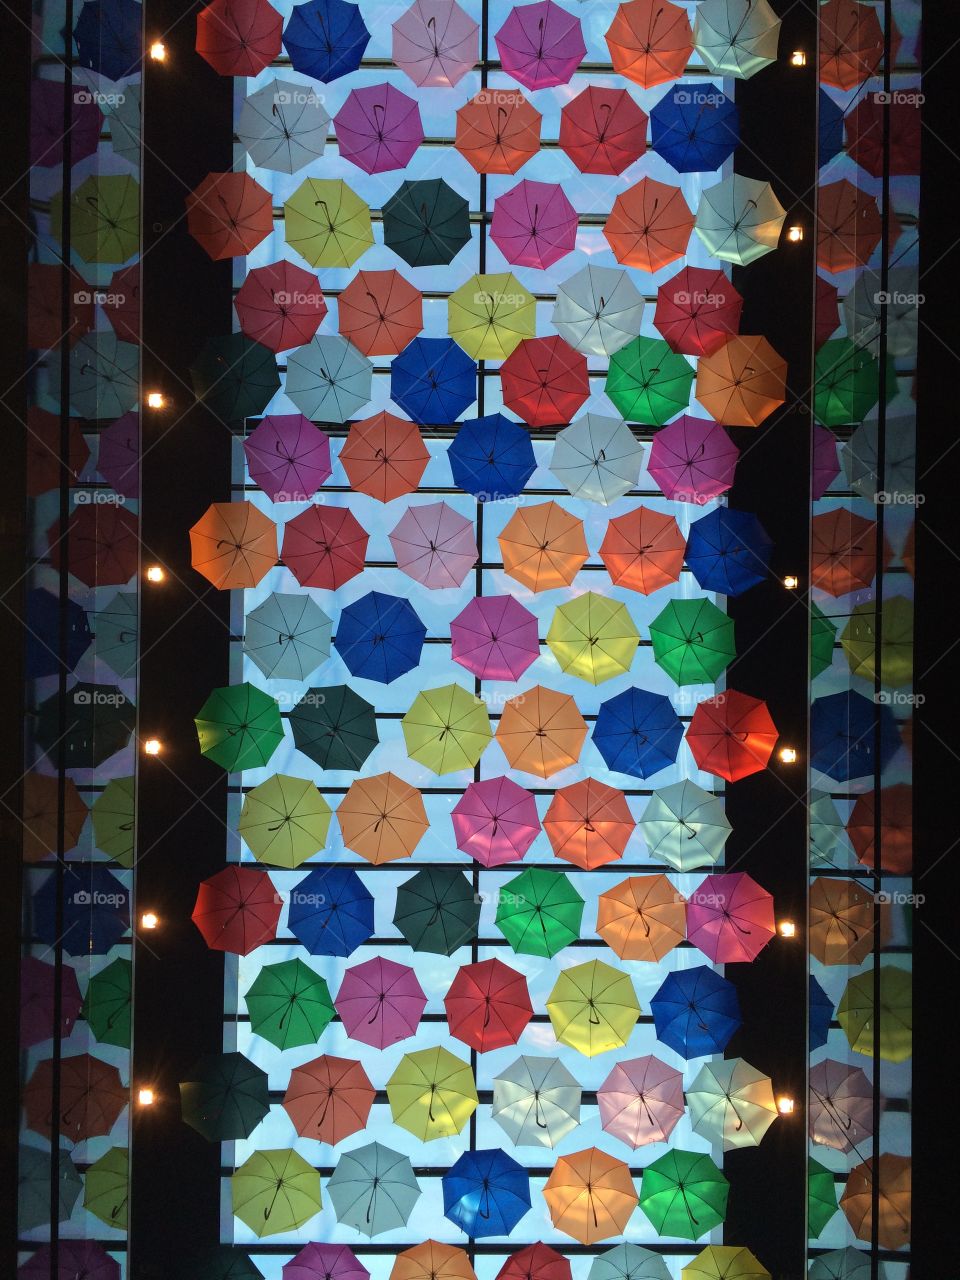 Colourful, pretty, and symmetrical arrangements of umbrellas. 